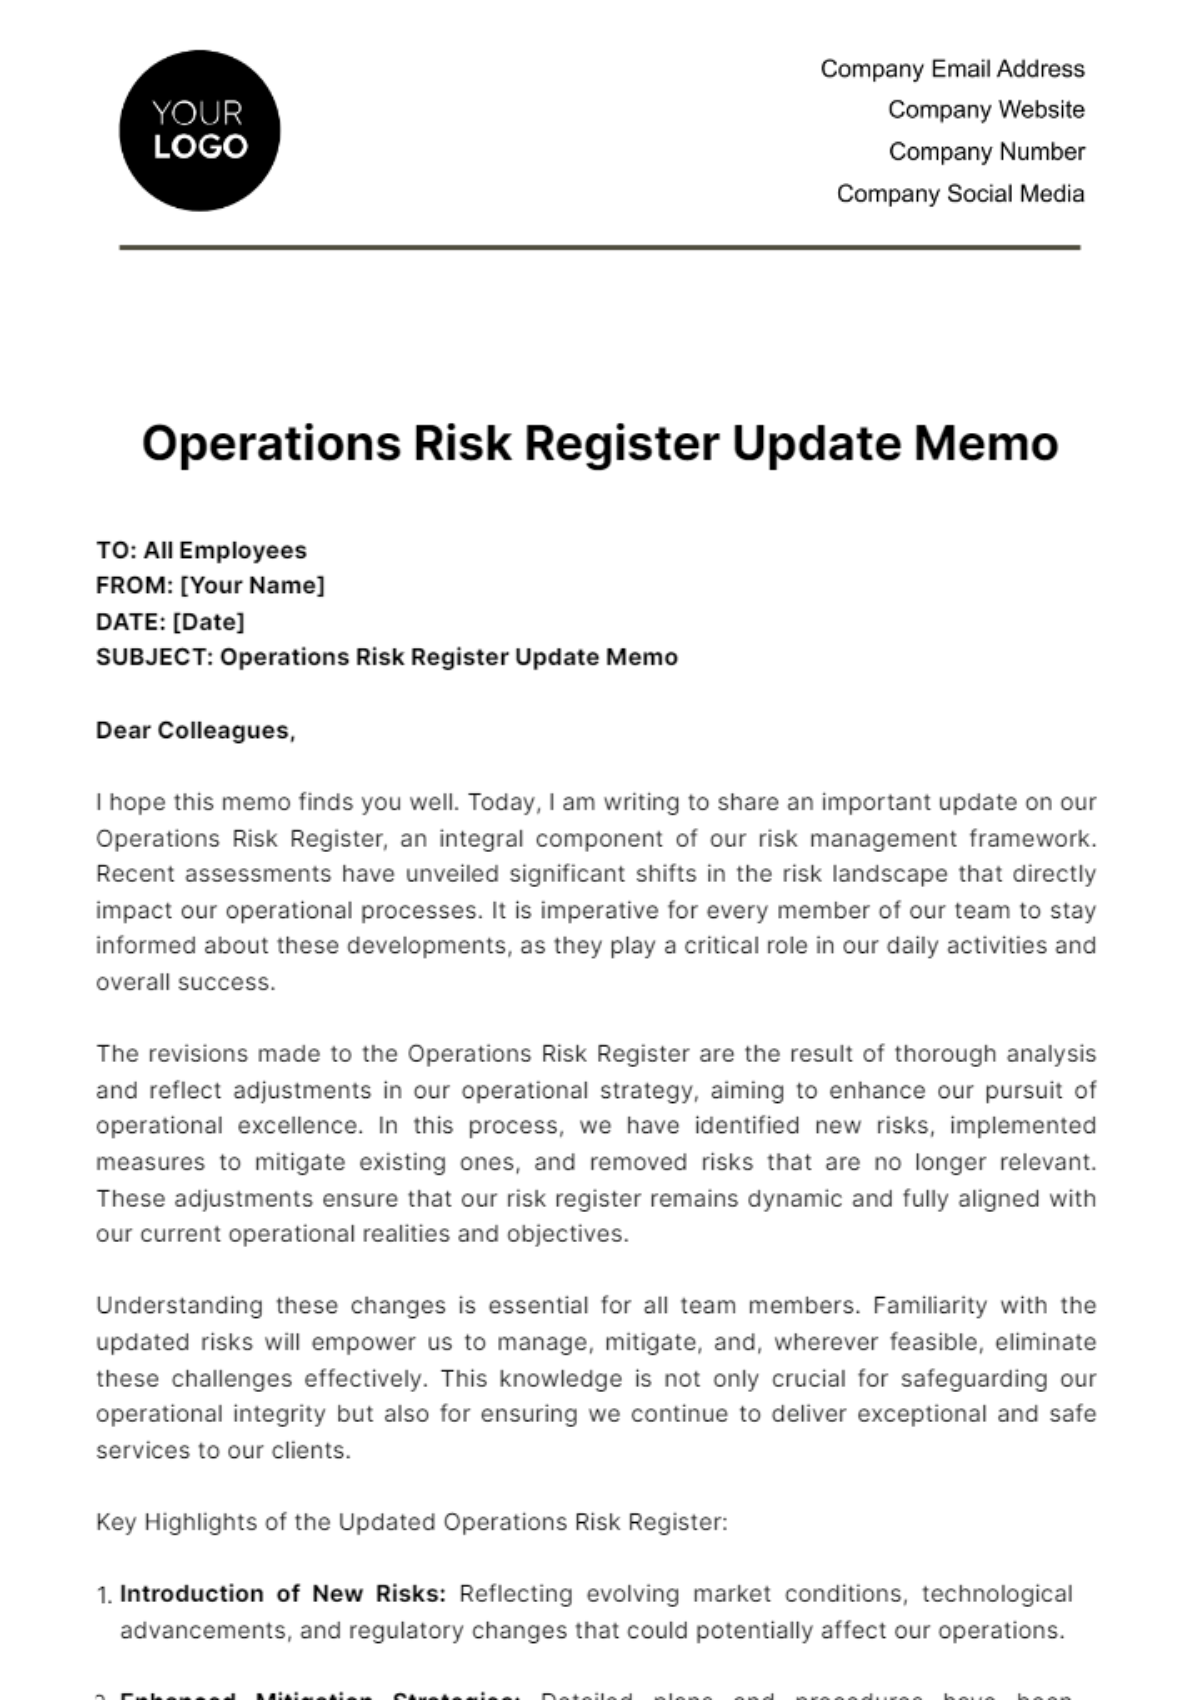 Free Operations Risk Register Update Memo Template